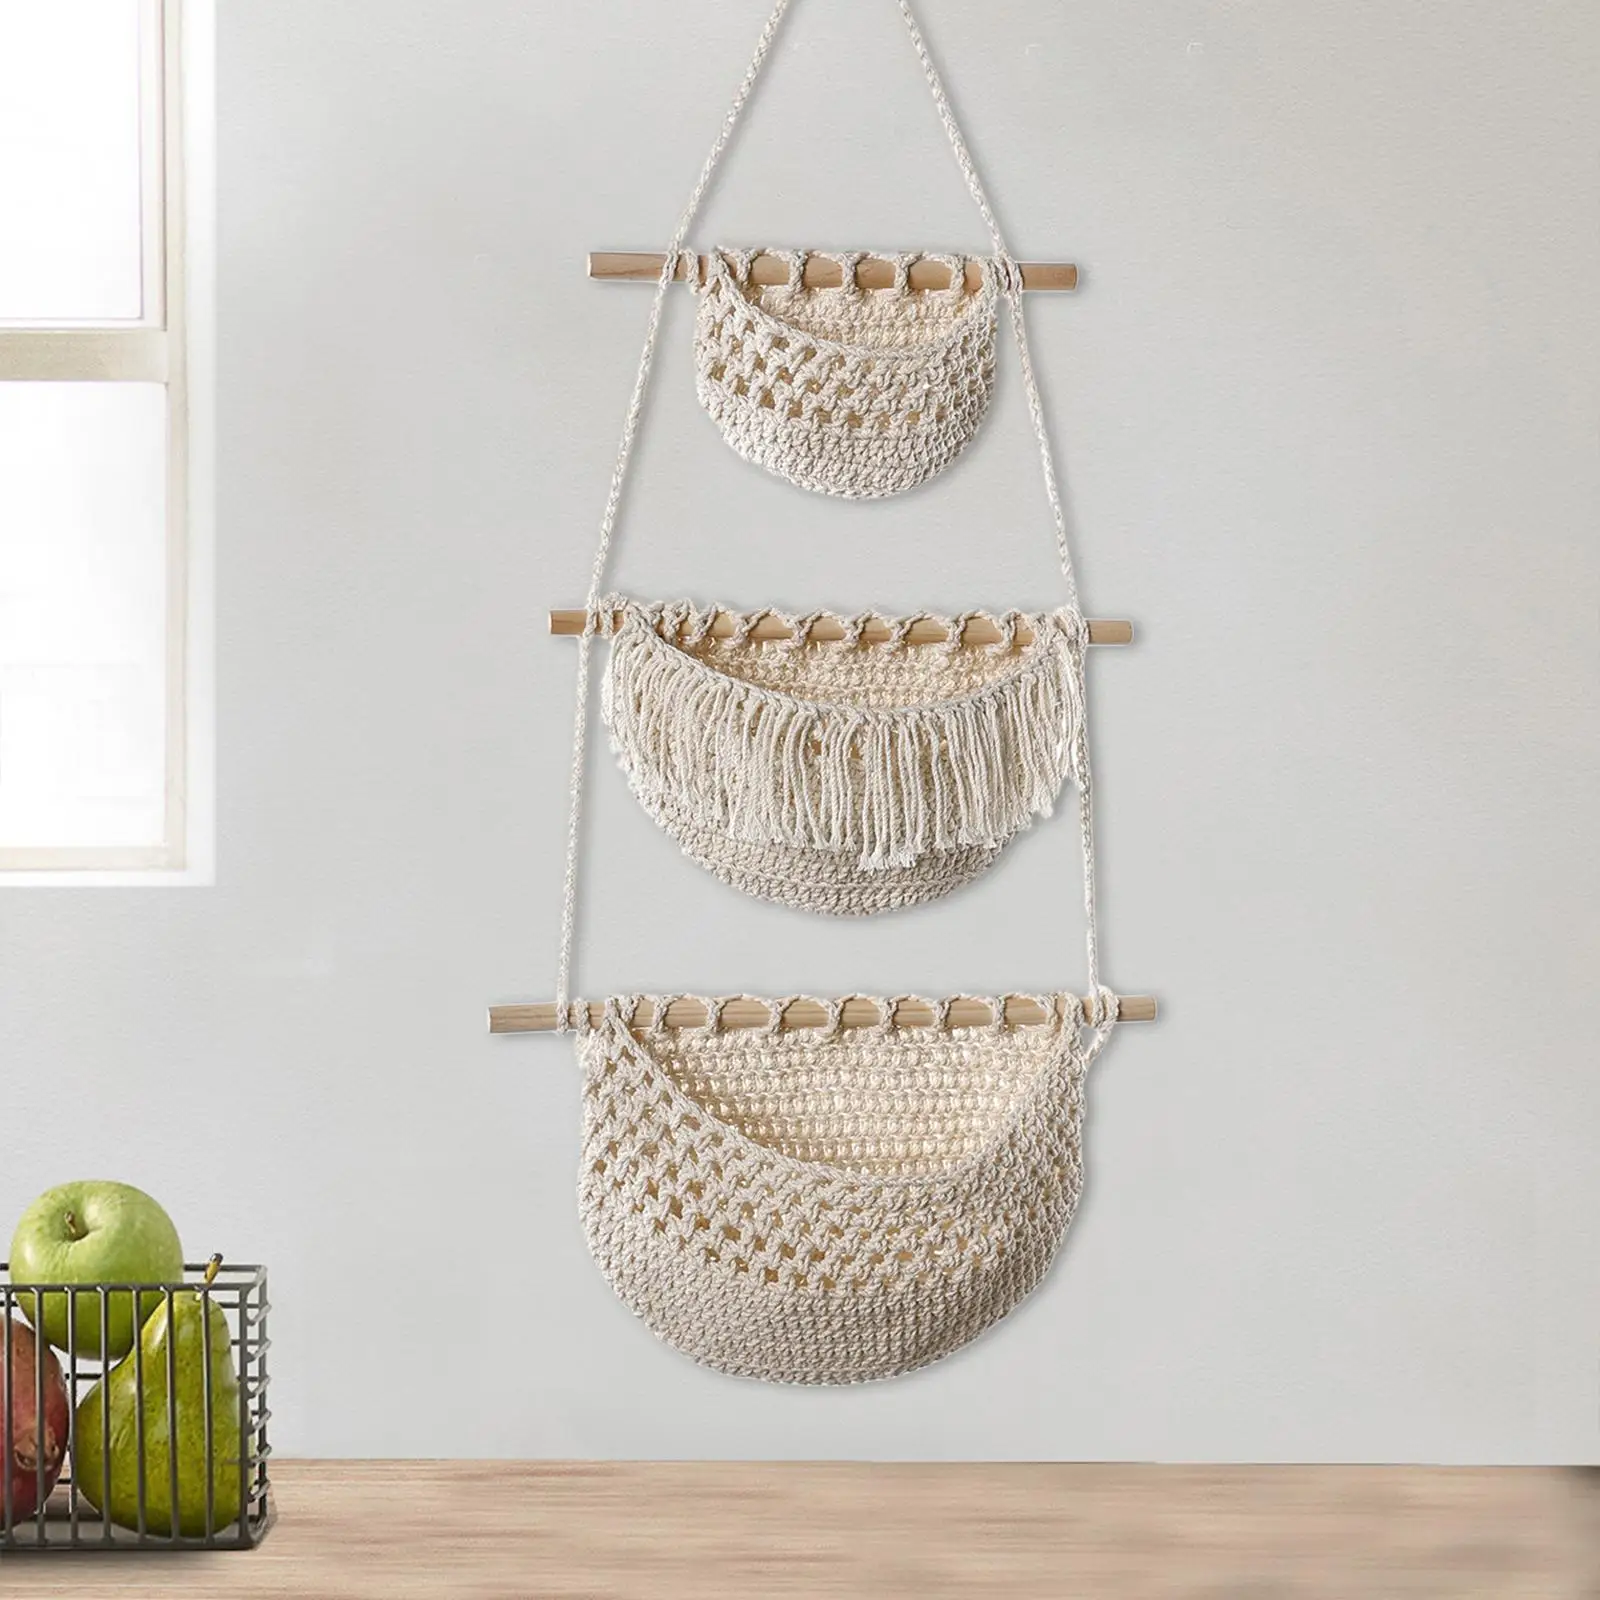 Hanging Fruit Baskets 3 Tiers Decorative Multipurpose Indoor Plant Holder for Organizing Potato Vegetables Garlic Bedroom